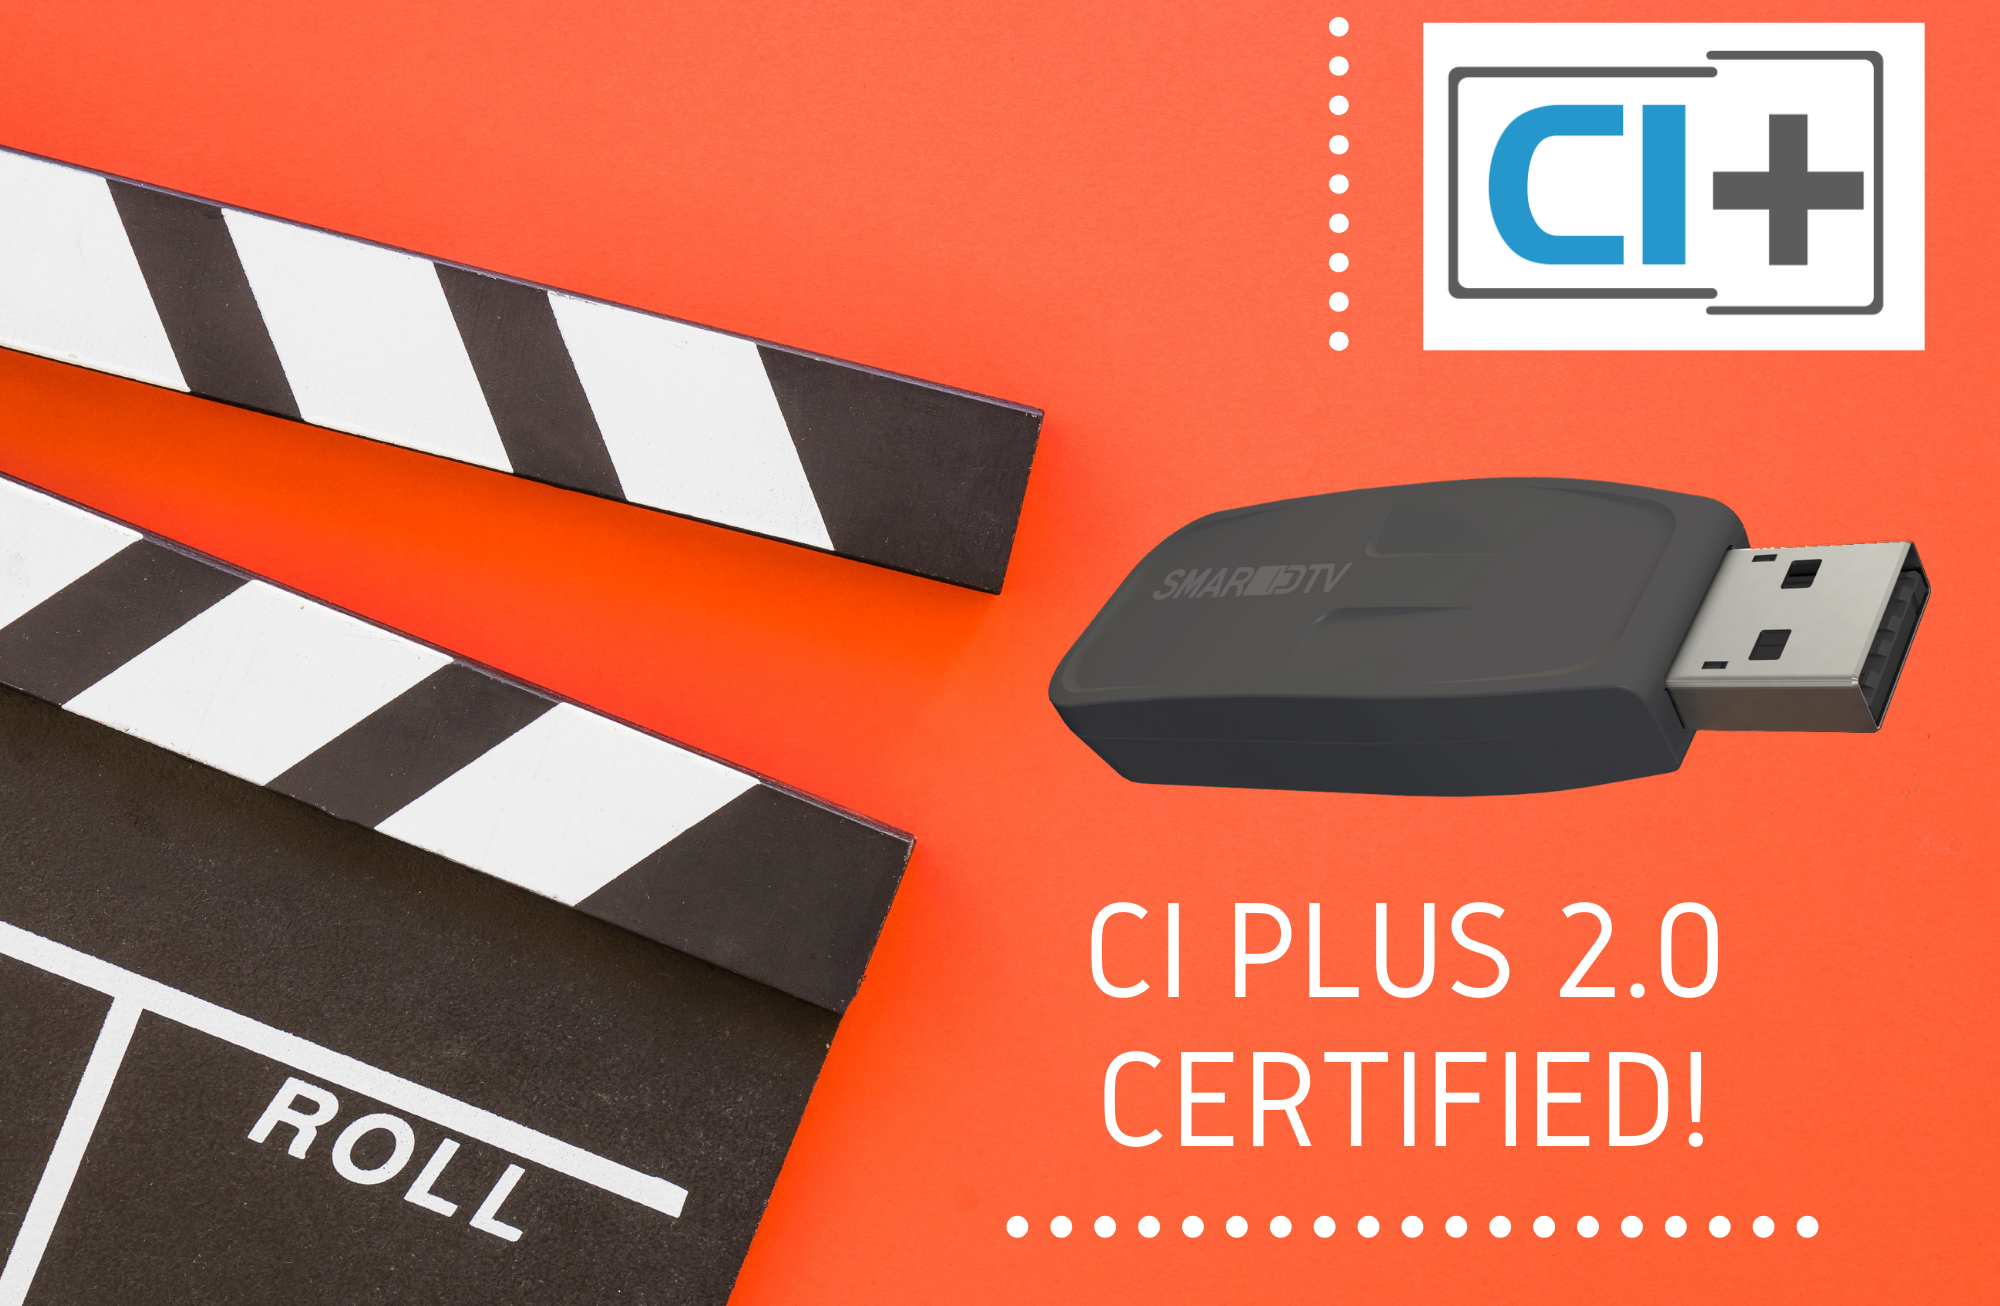 SmarDTV’s TV-Stick completes the CI Plus 2.0 certification